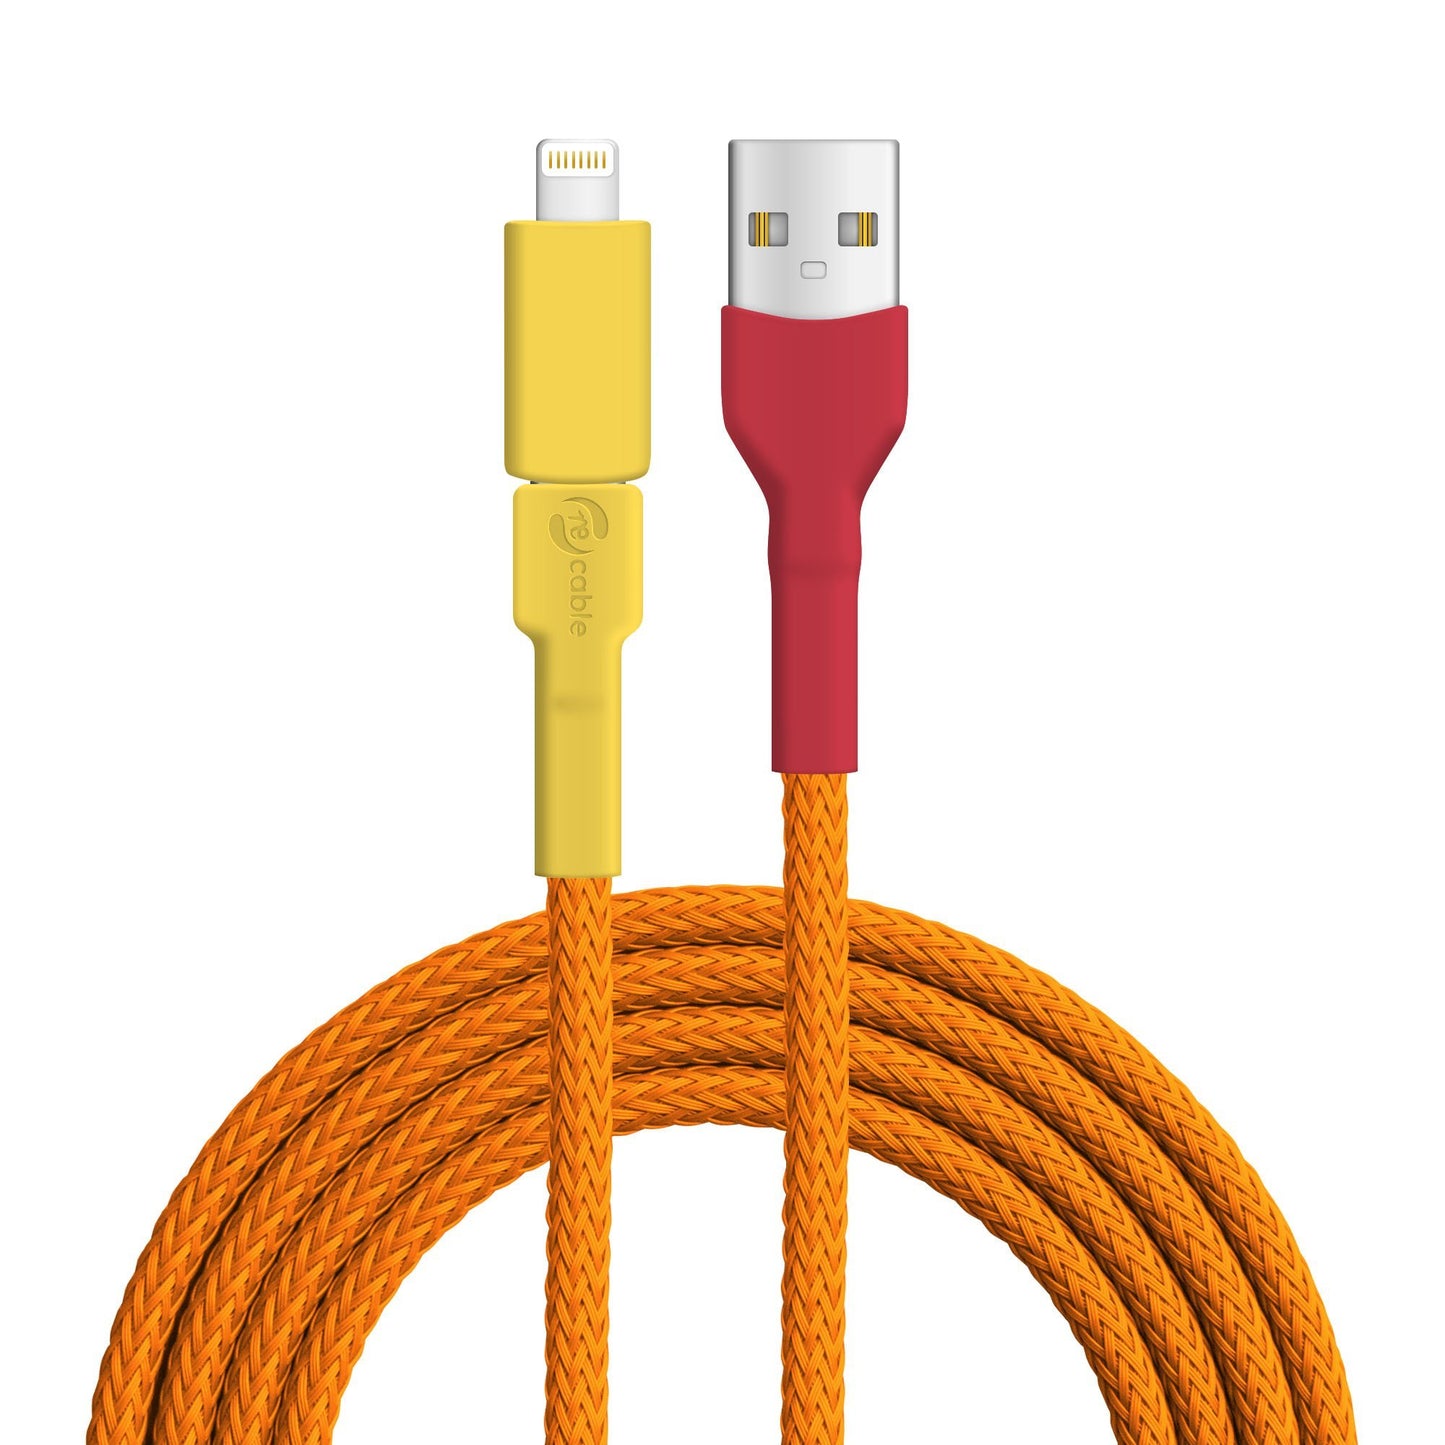 USB-Kabel, Design: Flammenlaubenvogel, Anschlüsse: USB A auf Micro-USB mit Lightning Adapter (verbunden)